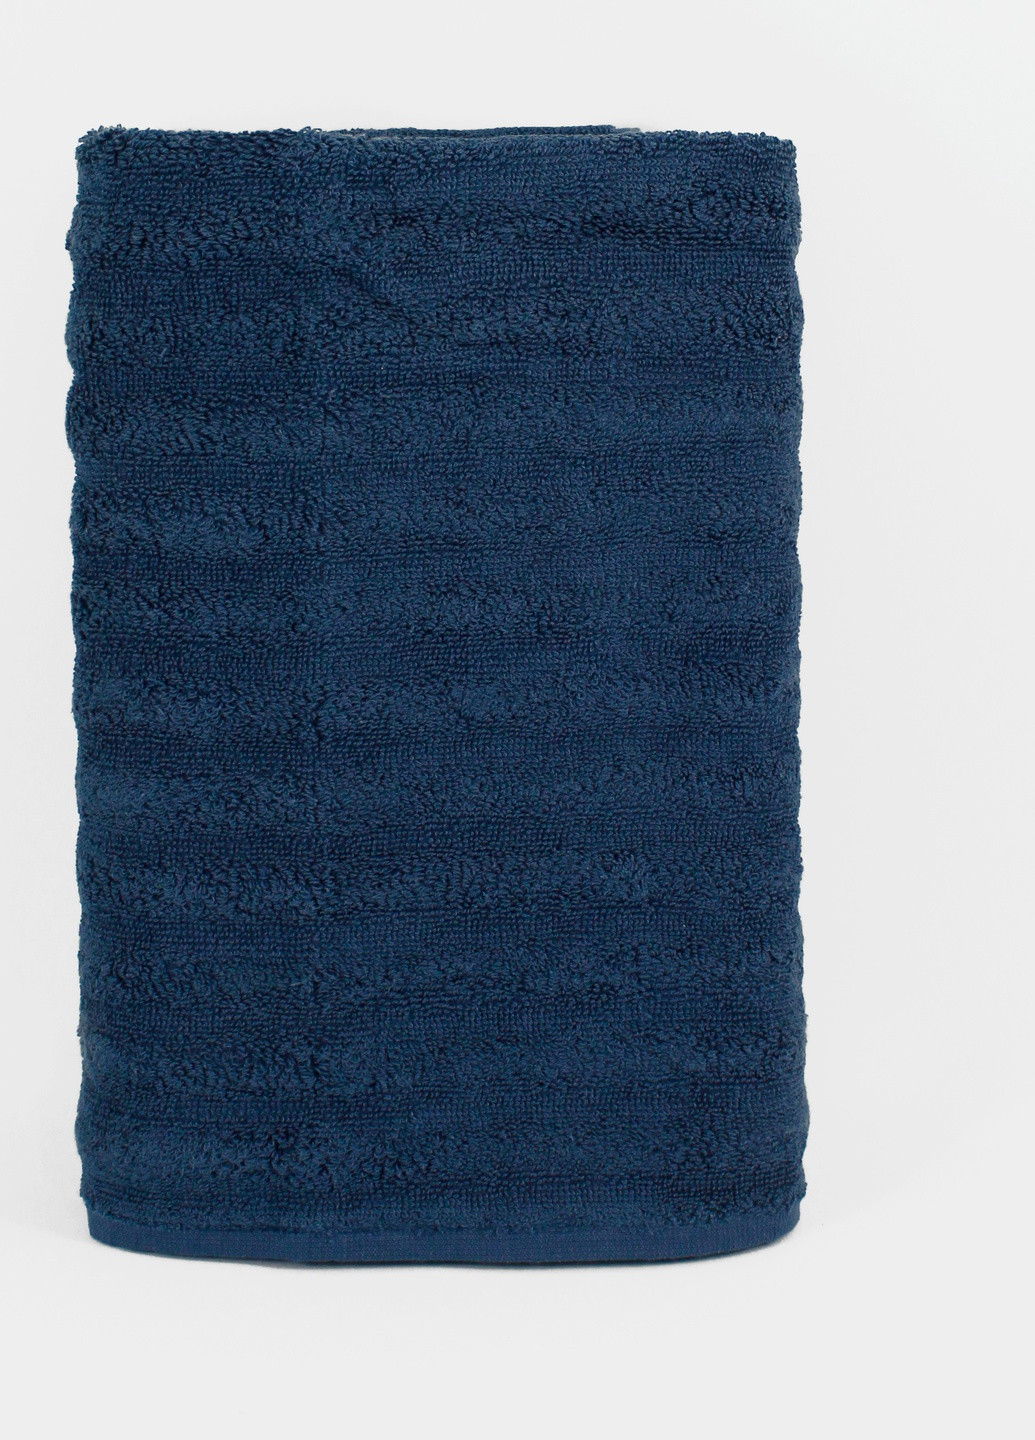 Bulgaria-Tex полотенце махровое сity, жаккардовое, деним, джинс, размер 50x90 cm синий производство - Болгария